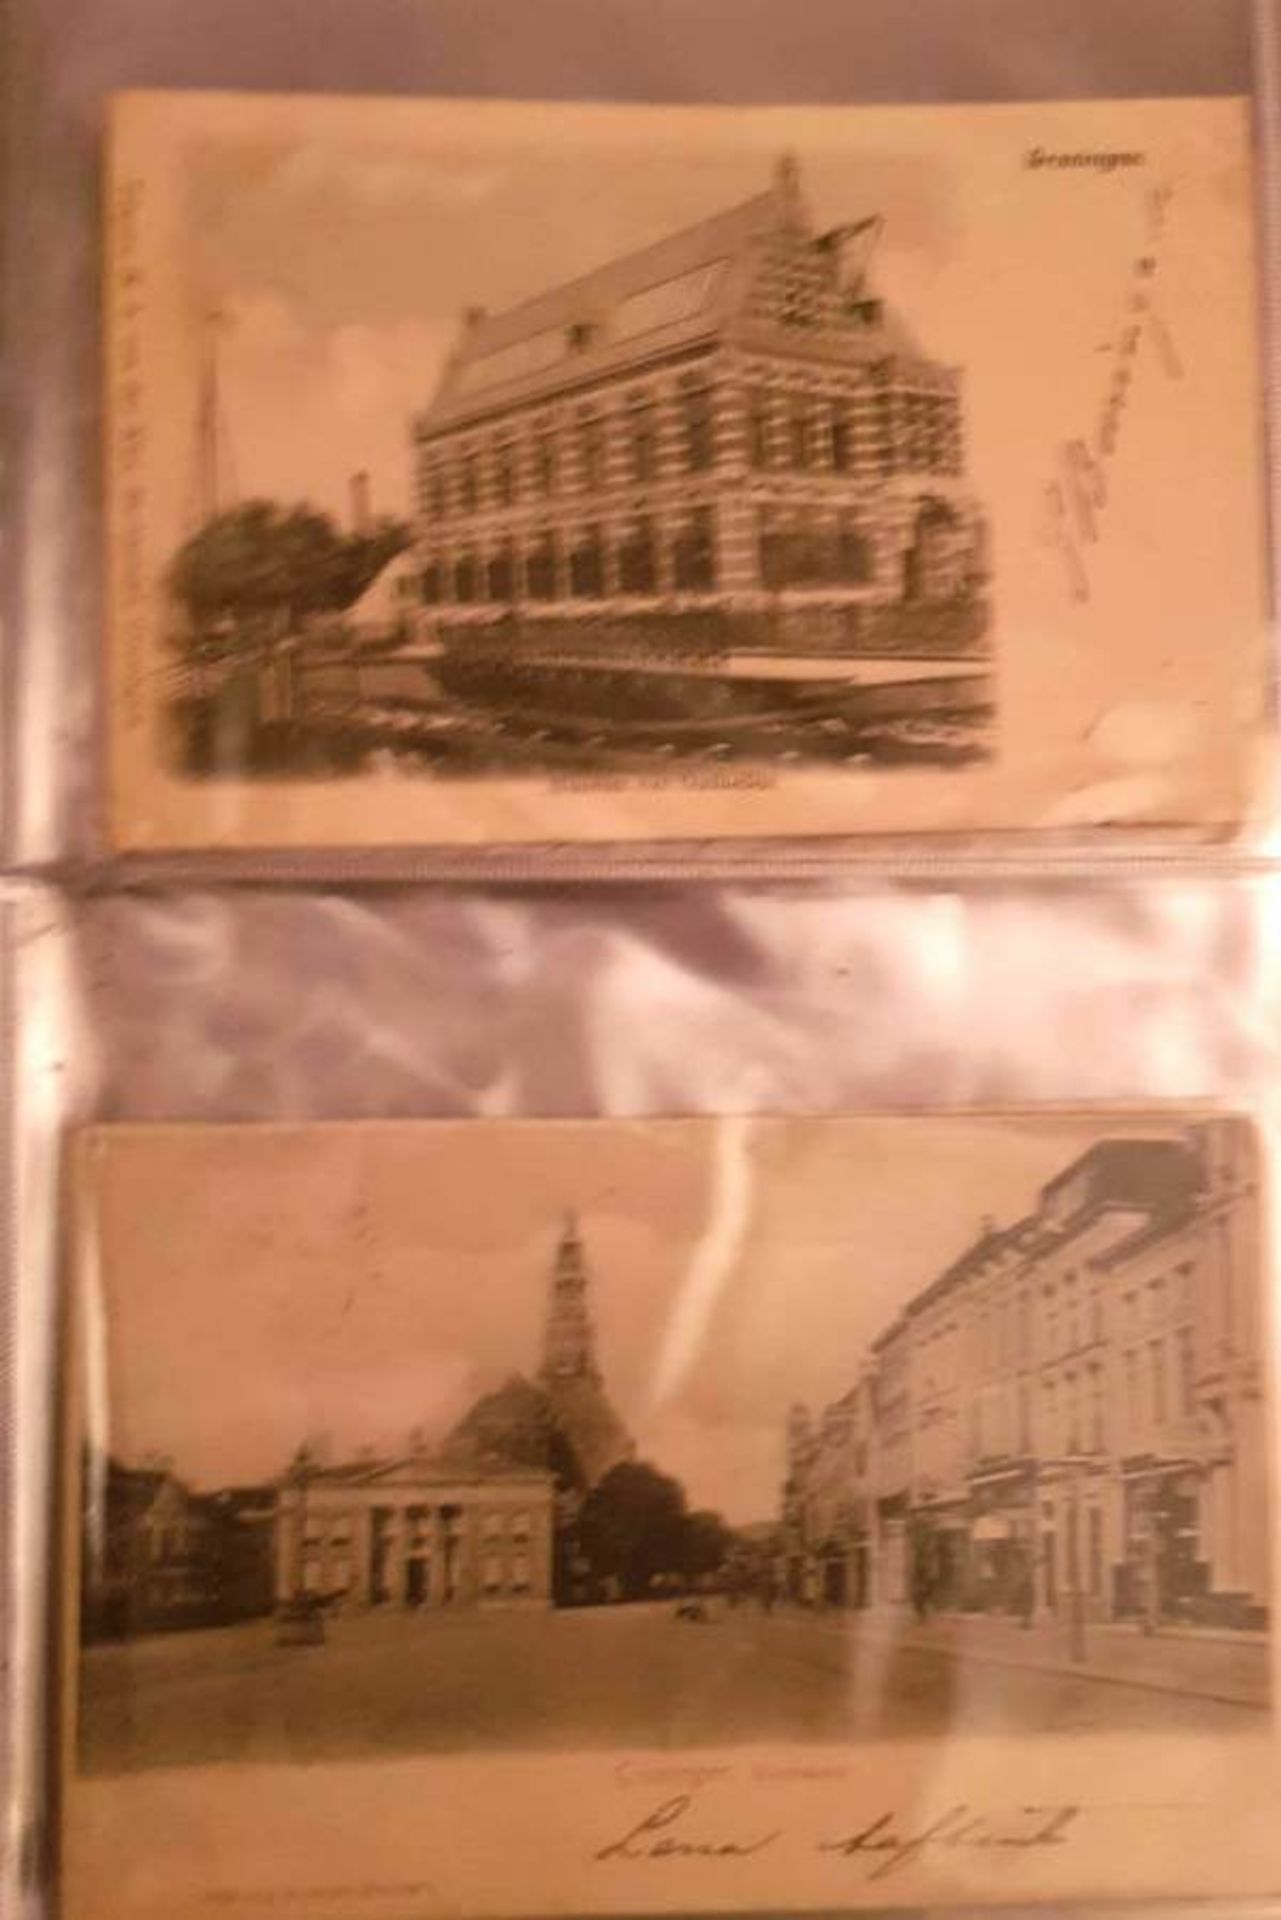 (Curiosa) AnsichtkaartenLot anischtkaarten mbt de stad Groningen Periode 1900-1920. In - Bild 9 aus 9